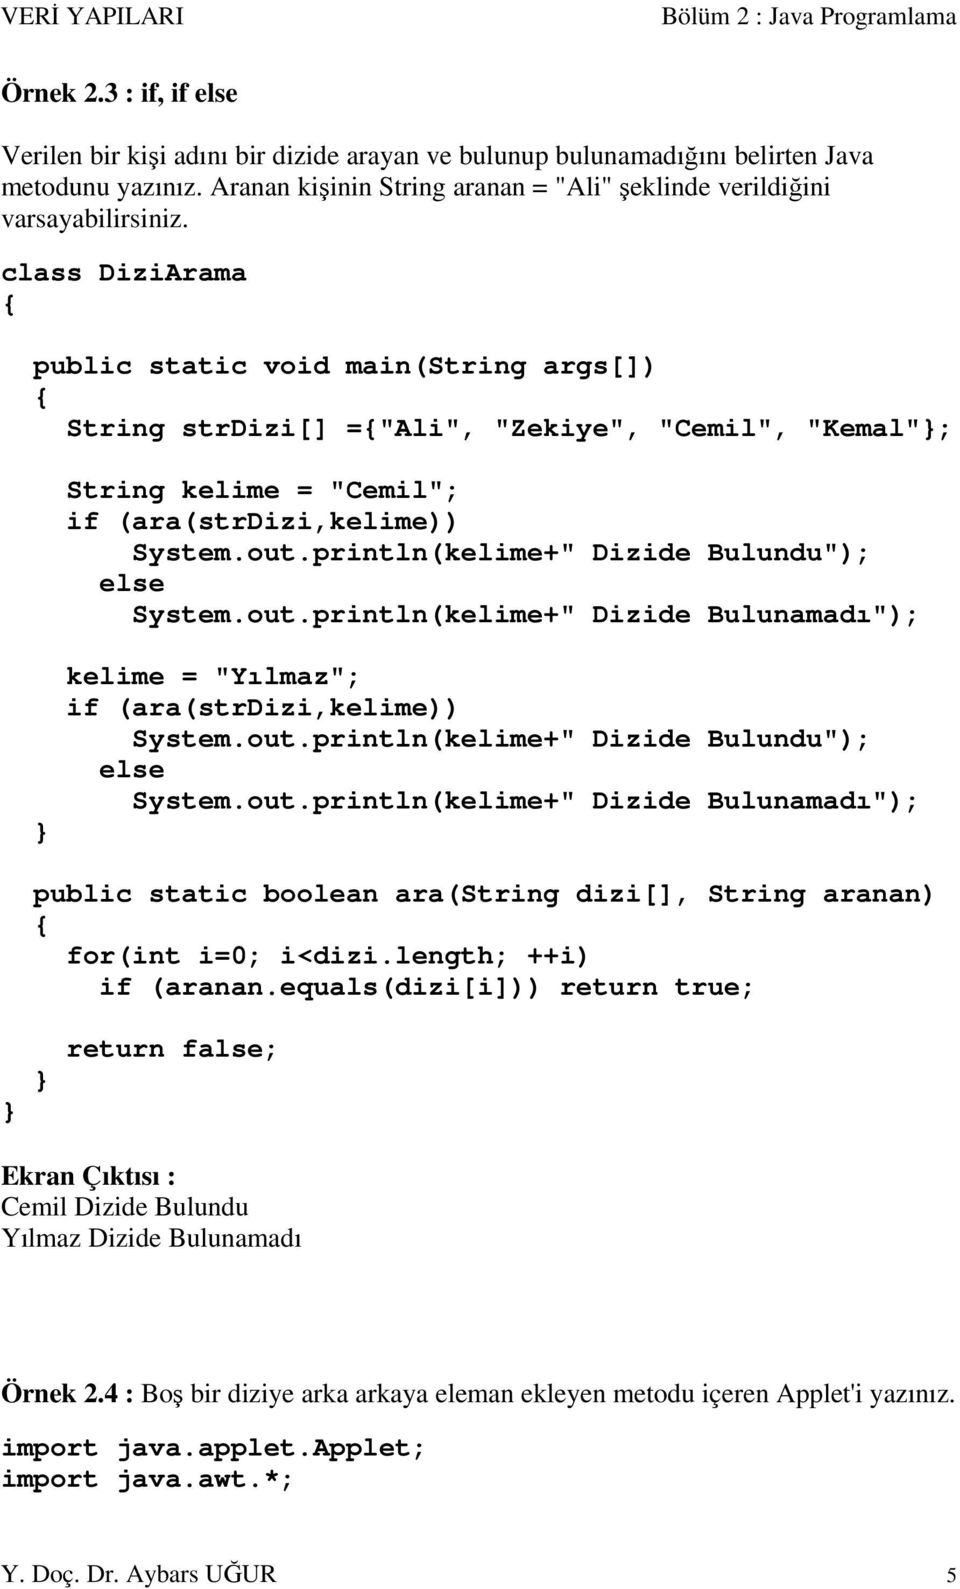 class DiziArama public static void main(string args[]) String strdizi[] ="Ali", "Zekiye", "Cemil", "Kemal"; String kelime = "Cemil"; if (ara(strdizi,kelime)) System.out.